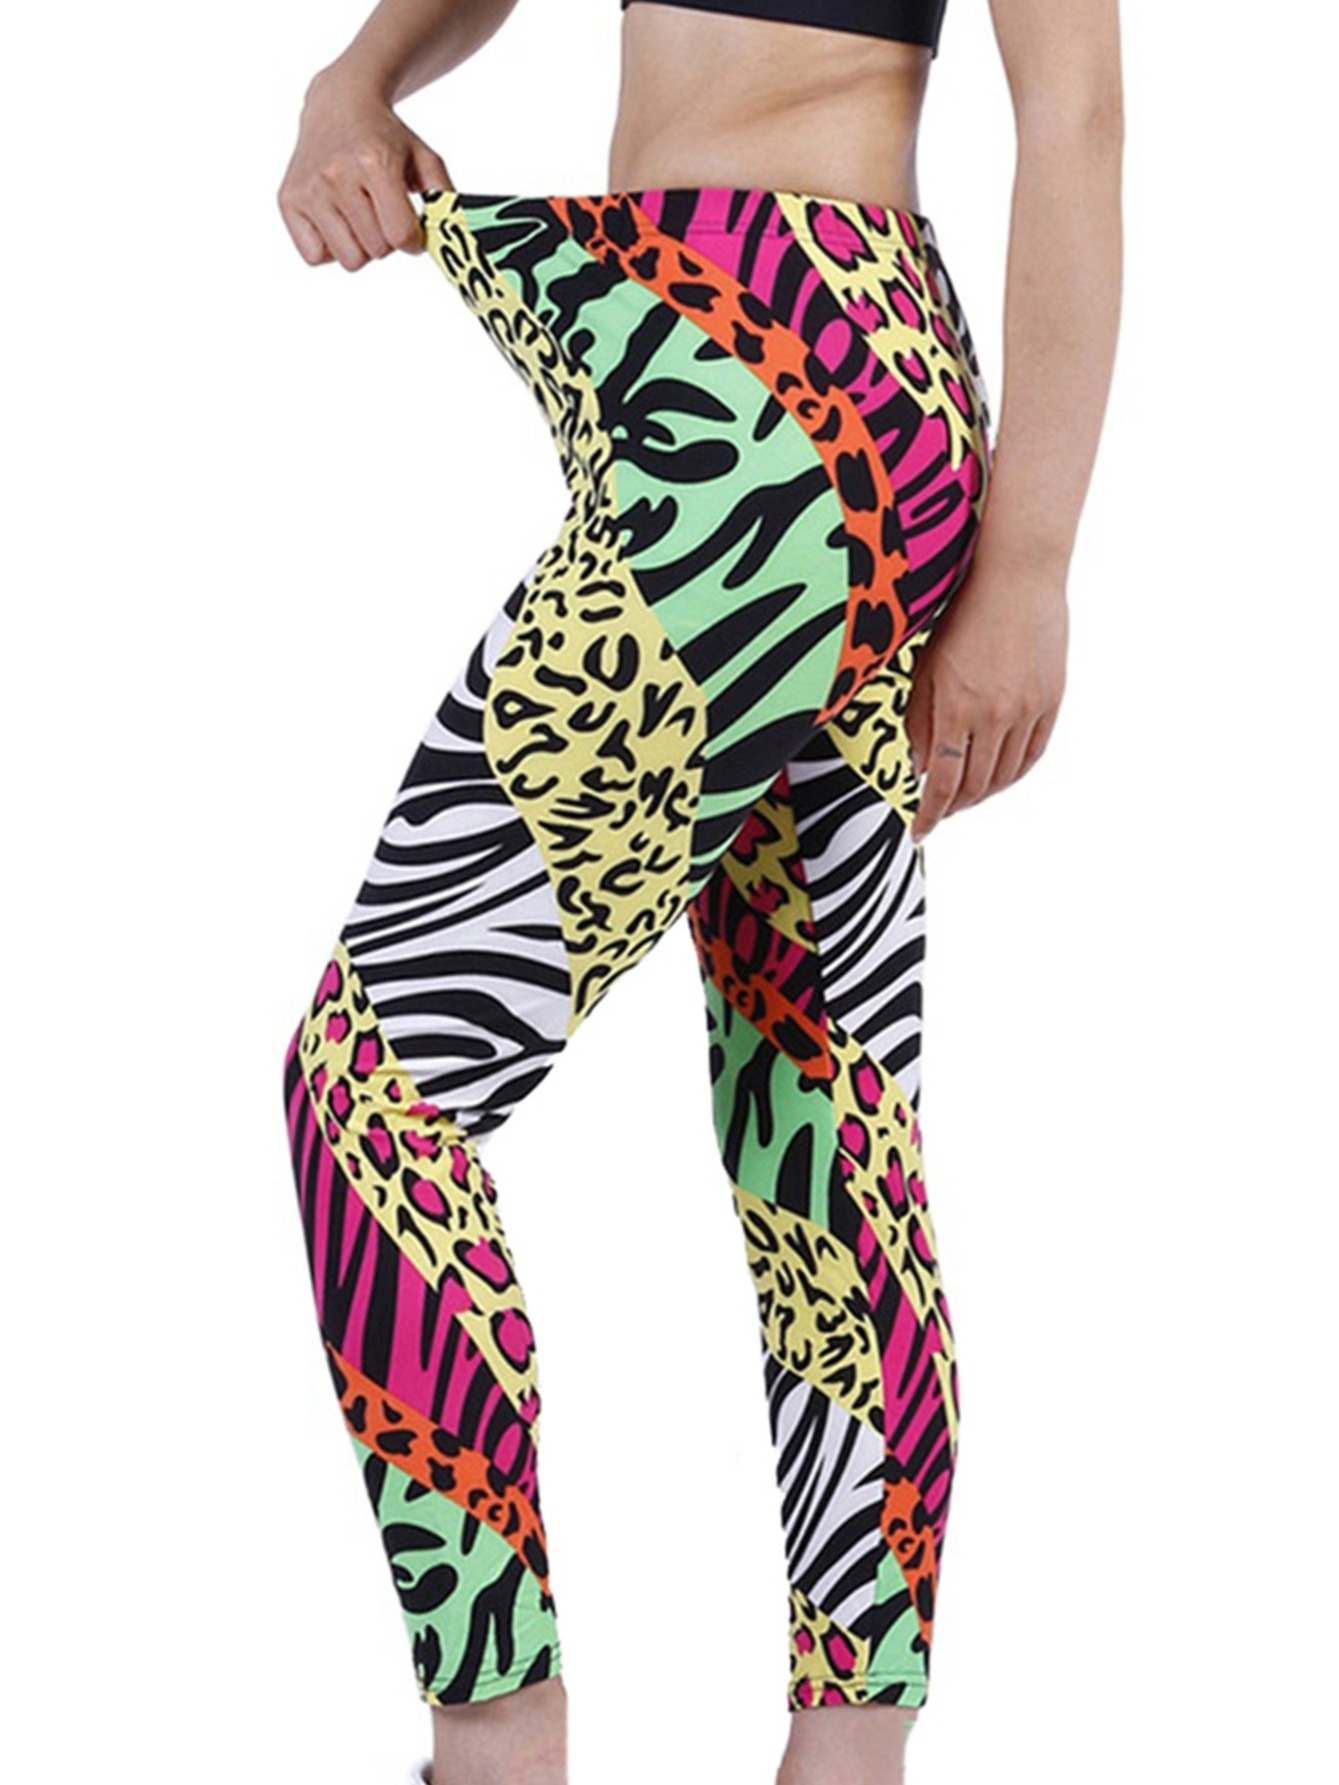 Legging Leggens-Leopardo Neon-Zebra Multicolores e Calça d